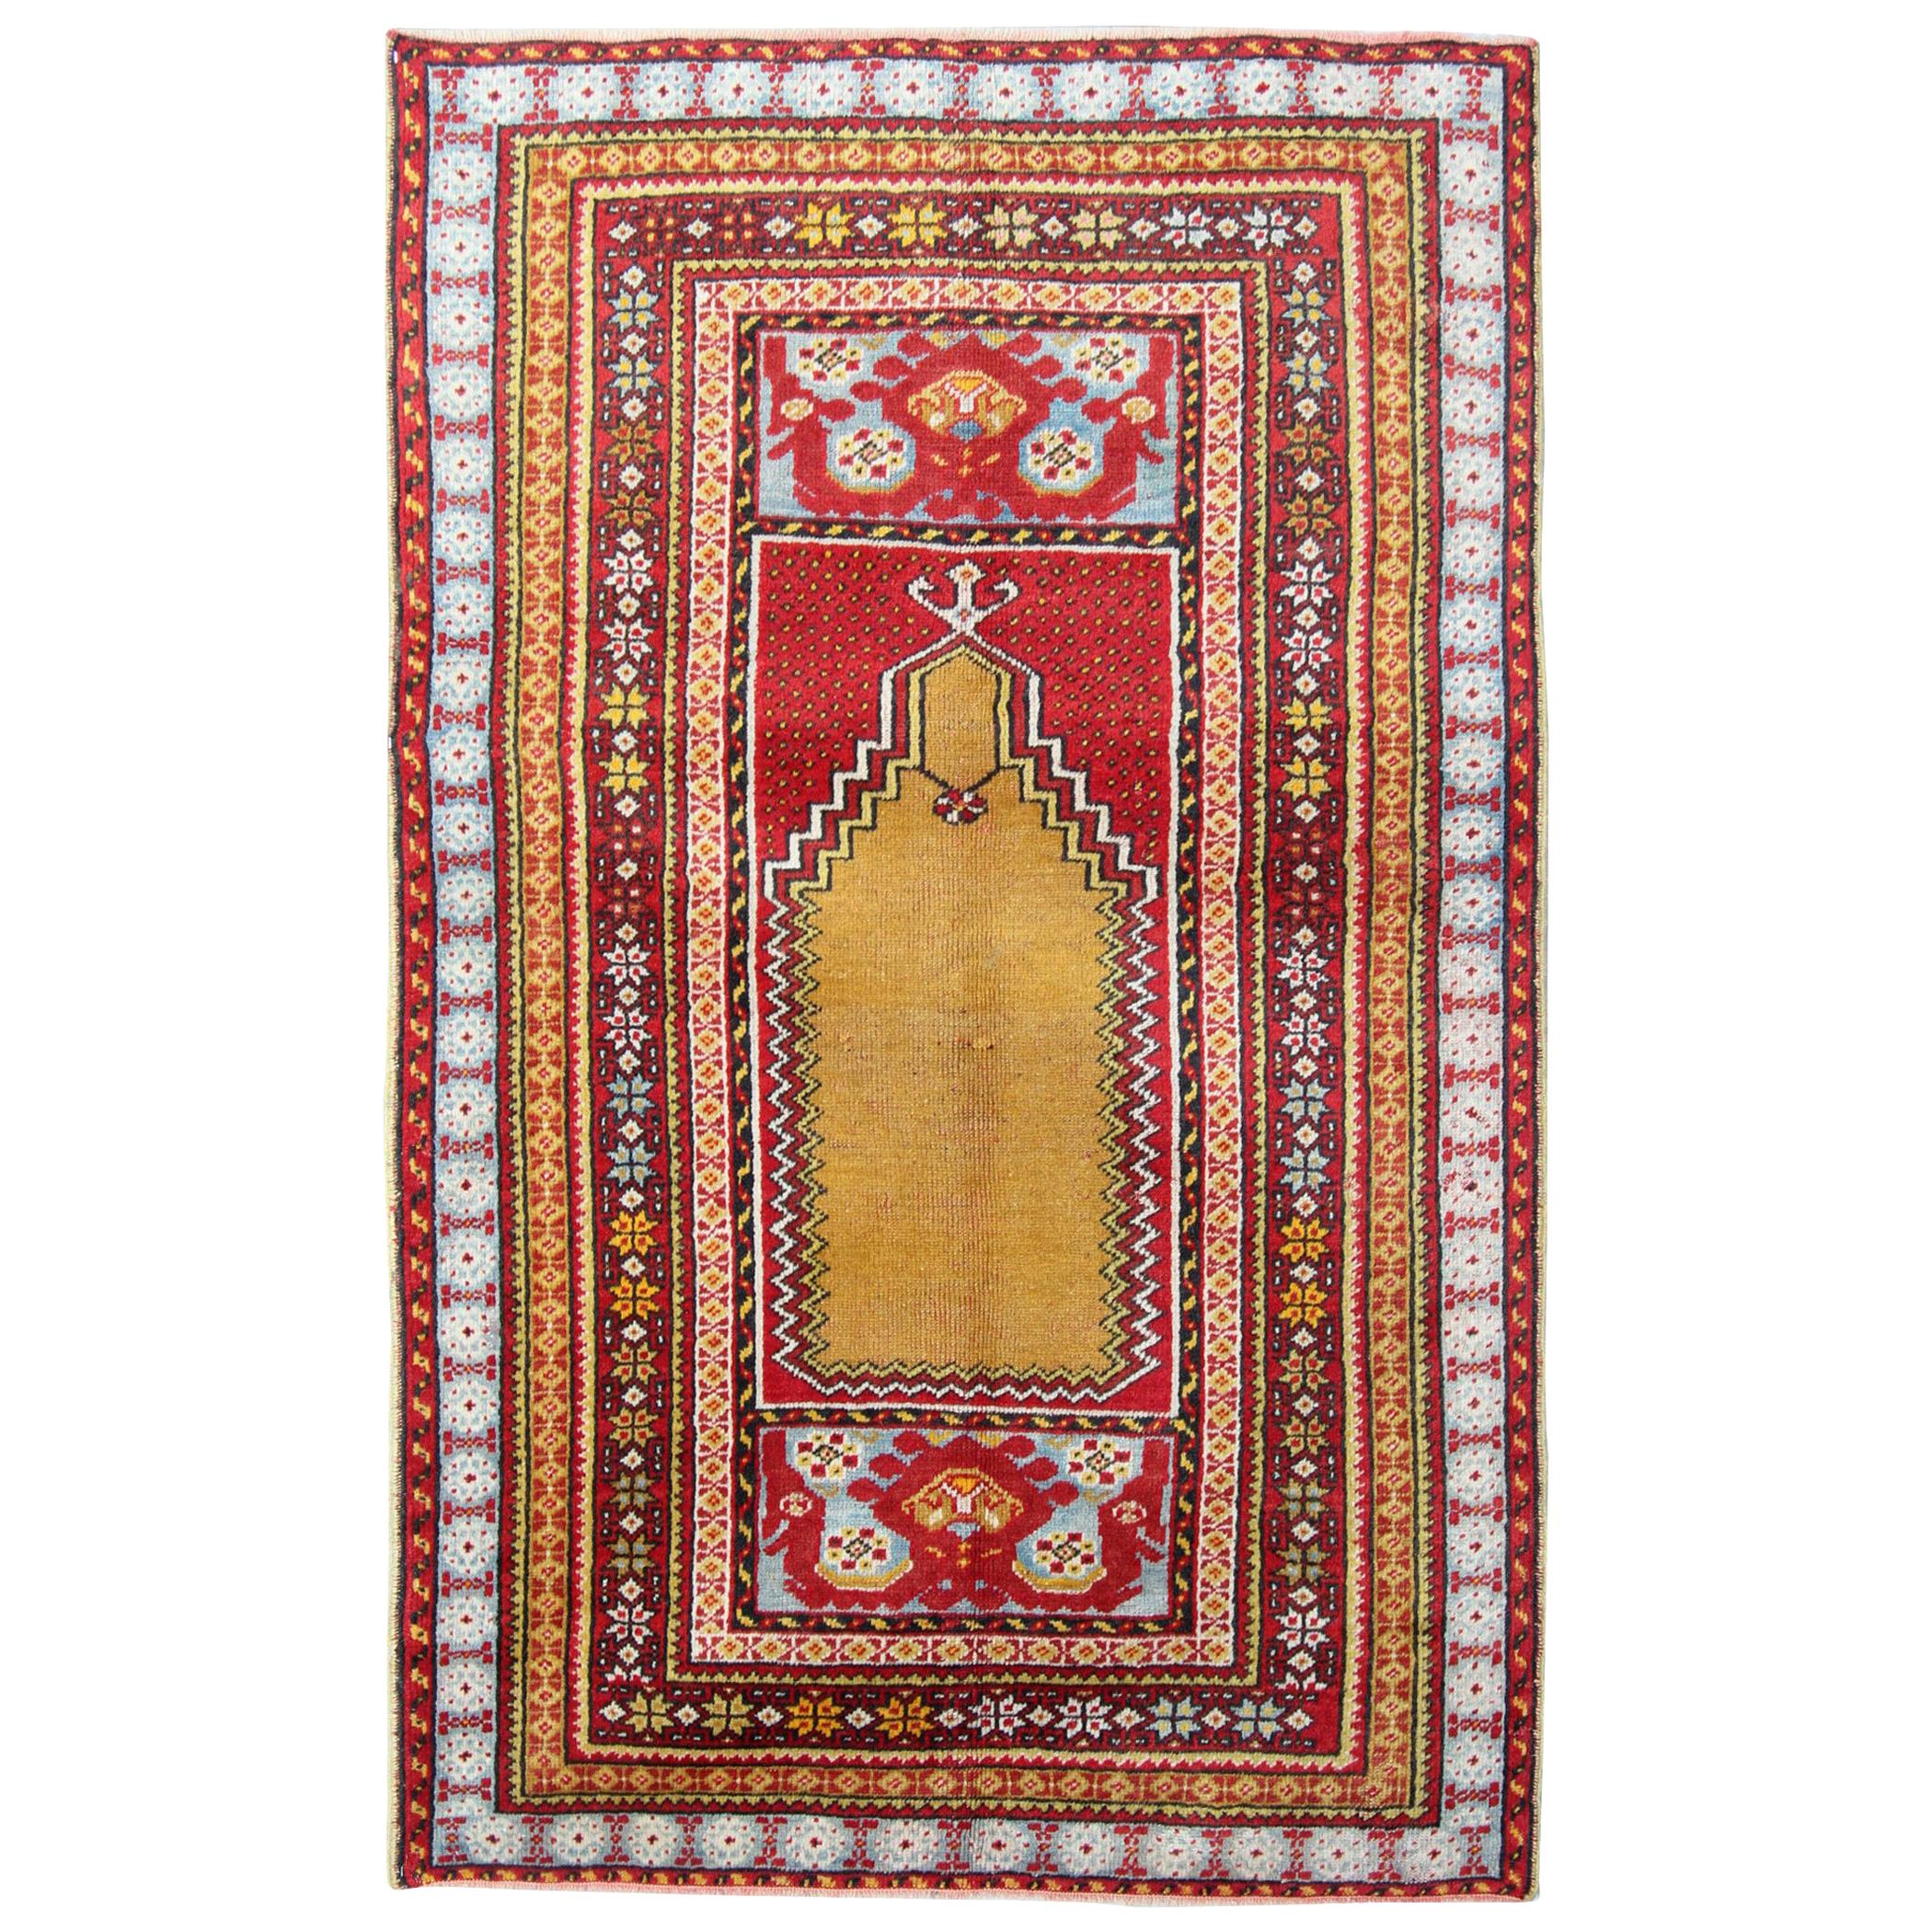 Antique Rugs Handmade Prayer Rug, Turkish Living Room Rug for Sale Home Decor